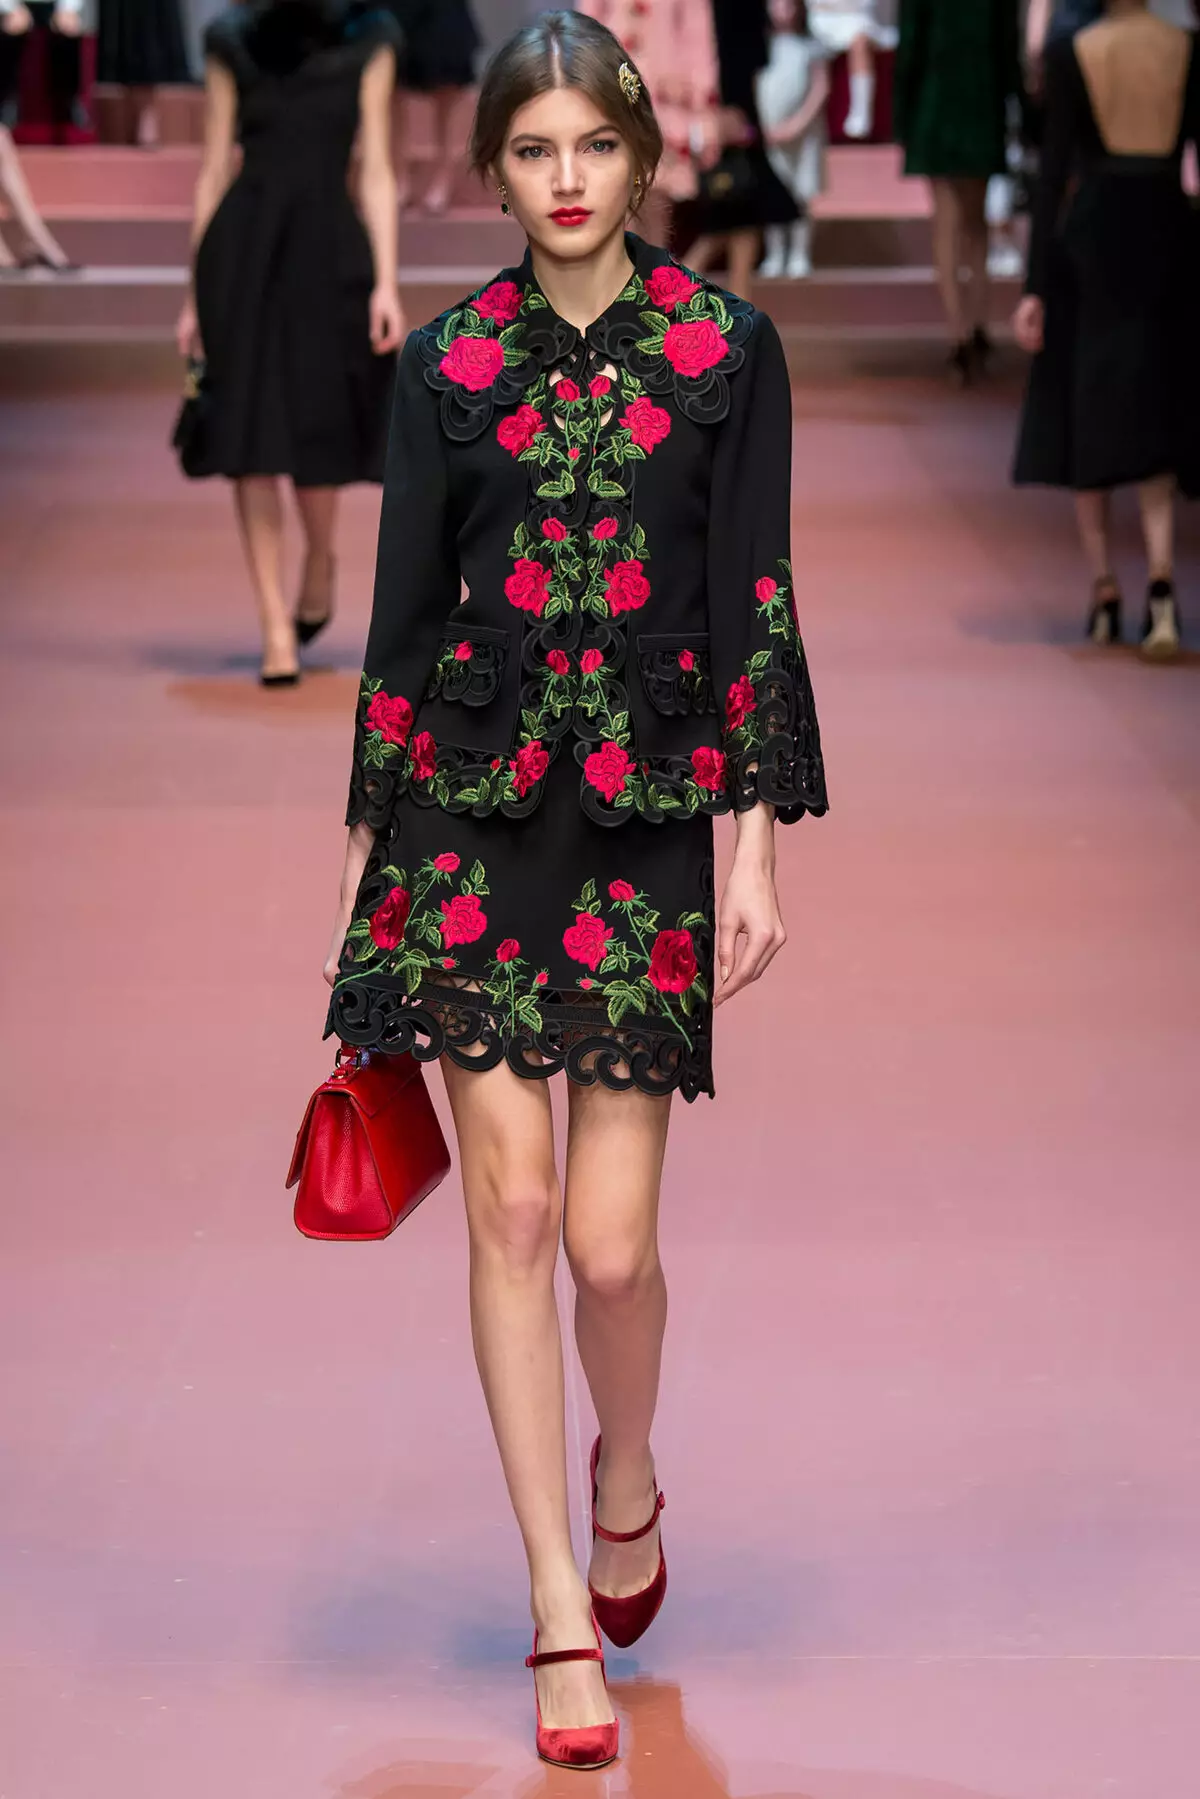 Dolce Coat Gabbana (54 fotos): Modelos 2021-2022 529_35